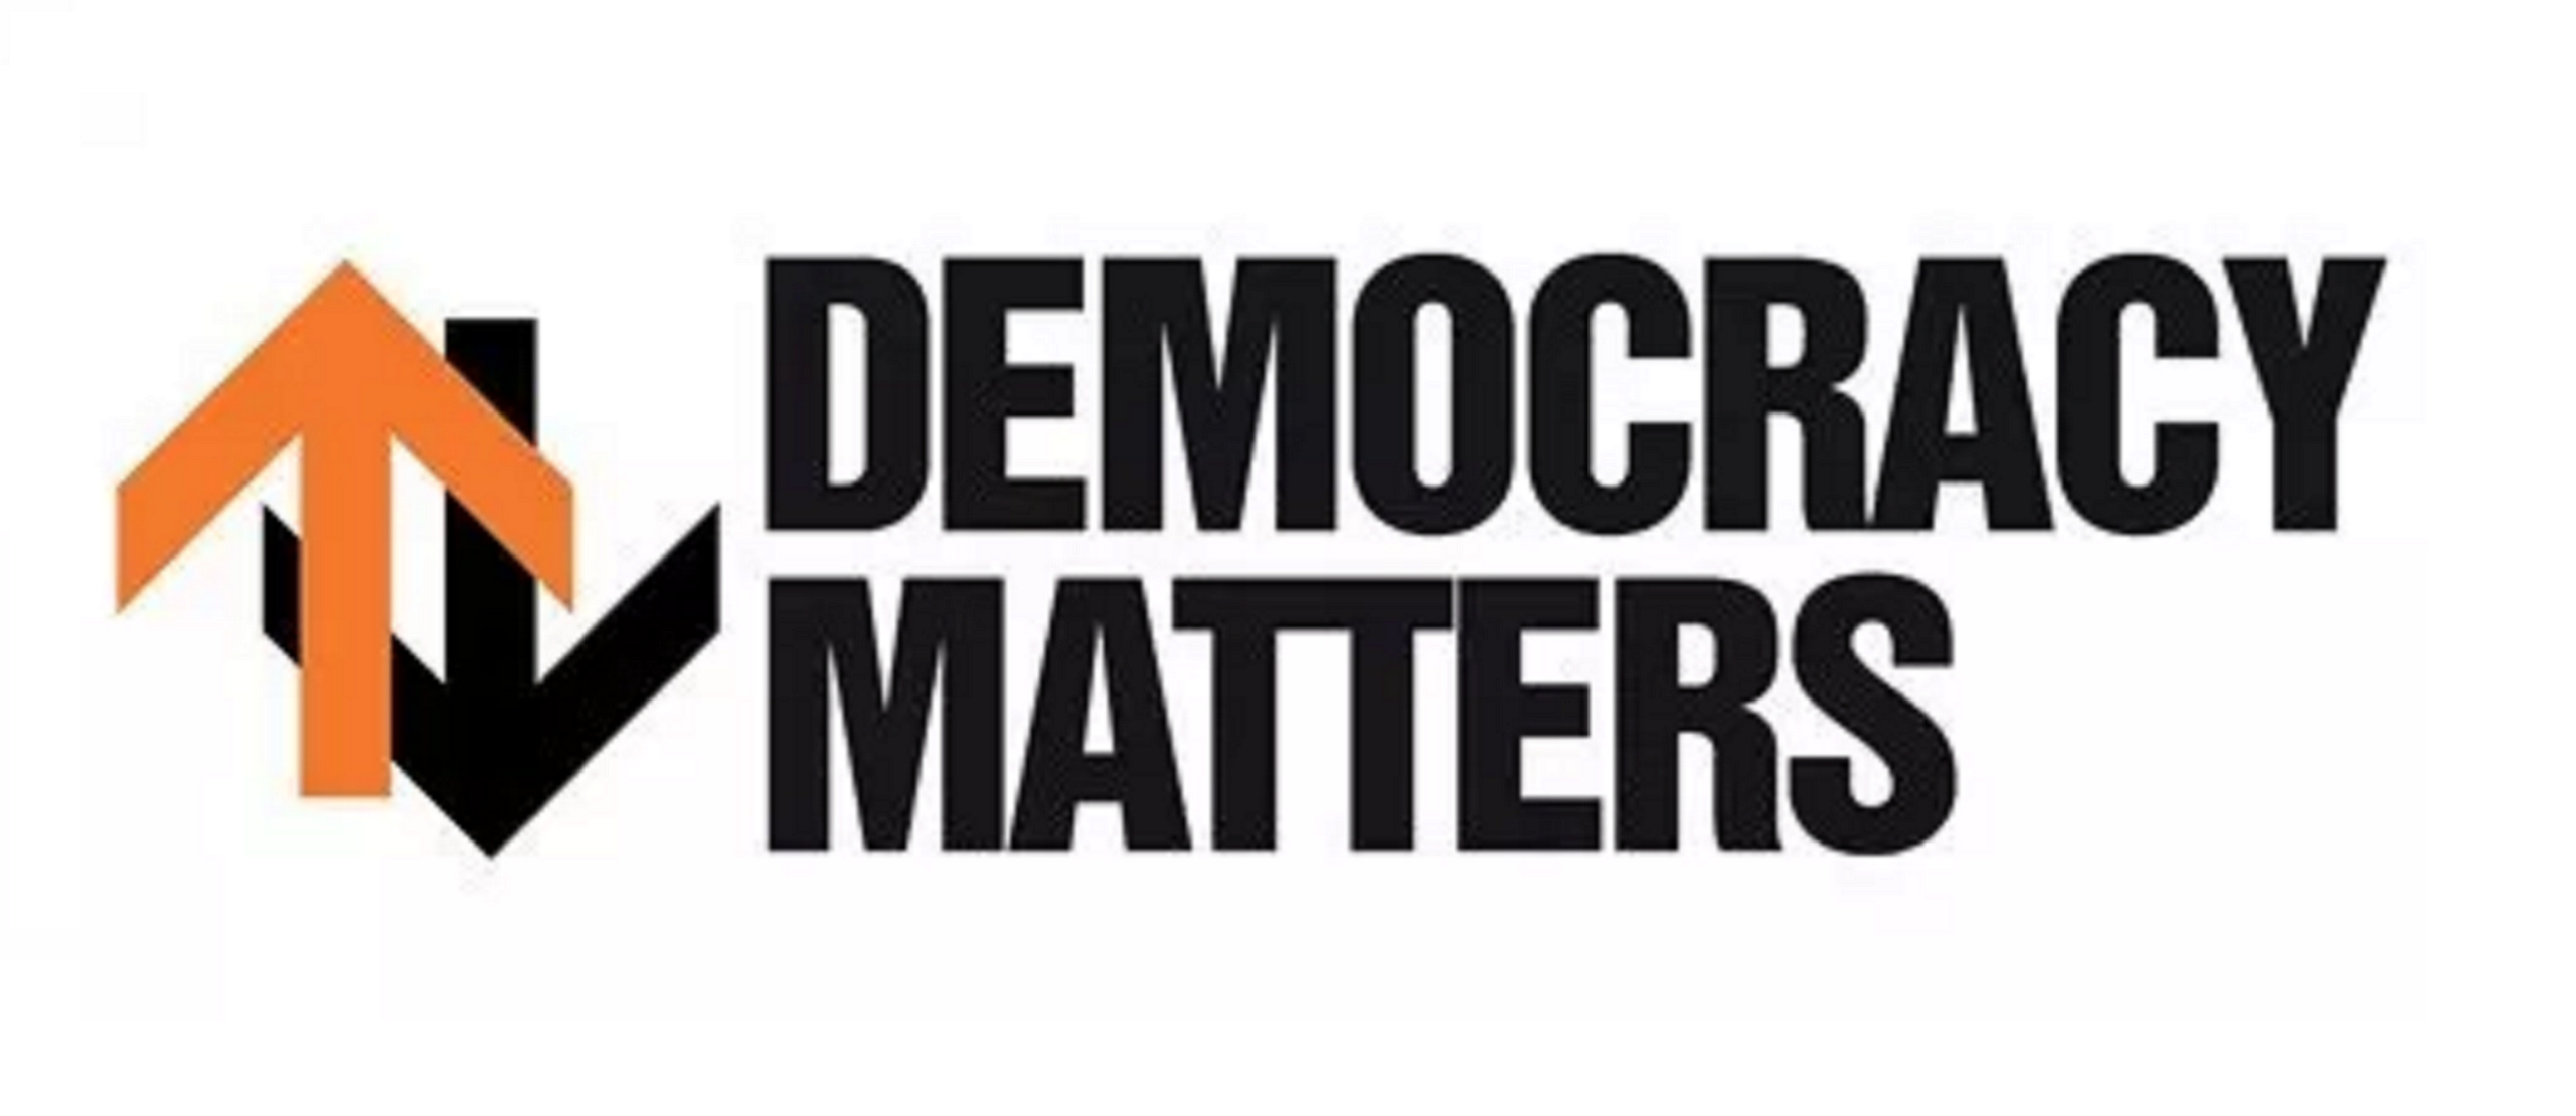 Democracy matters logo